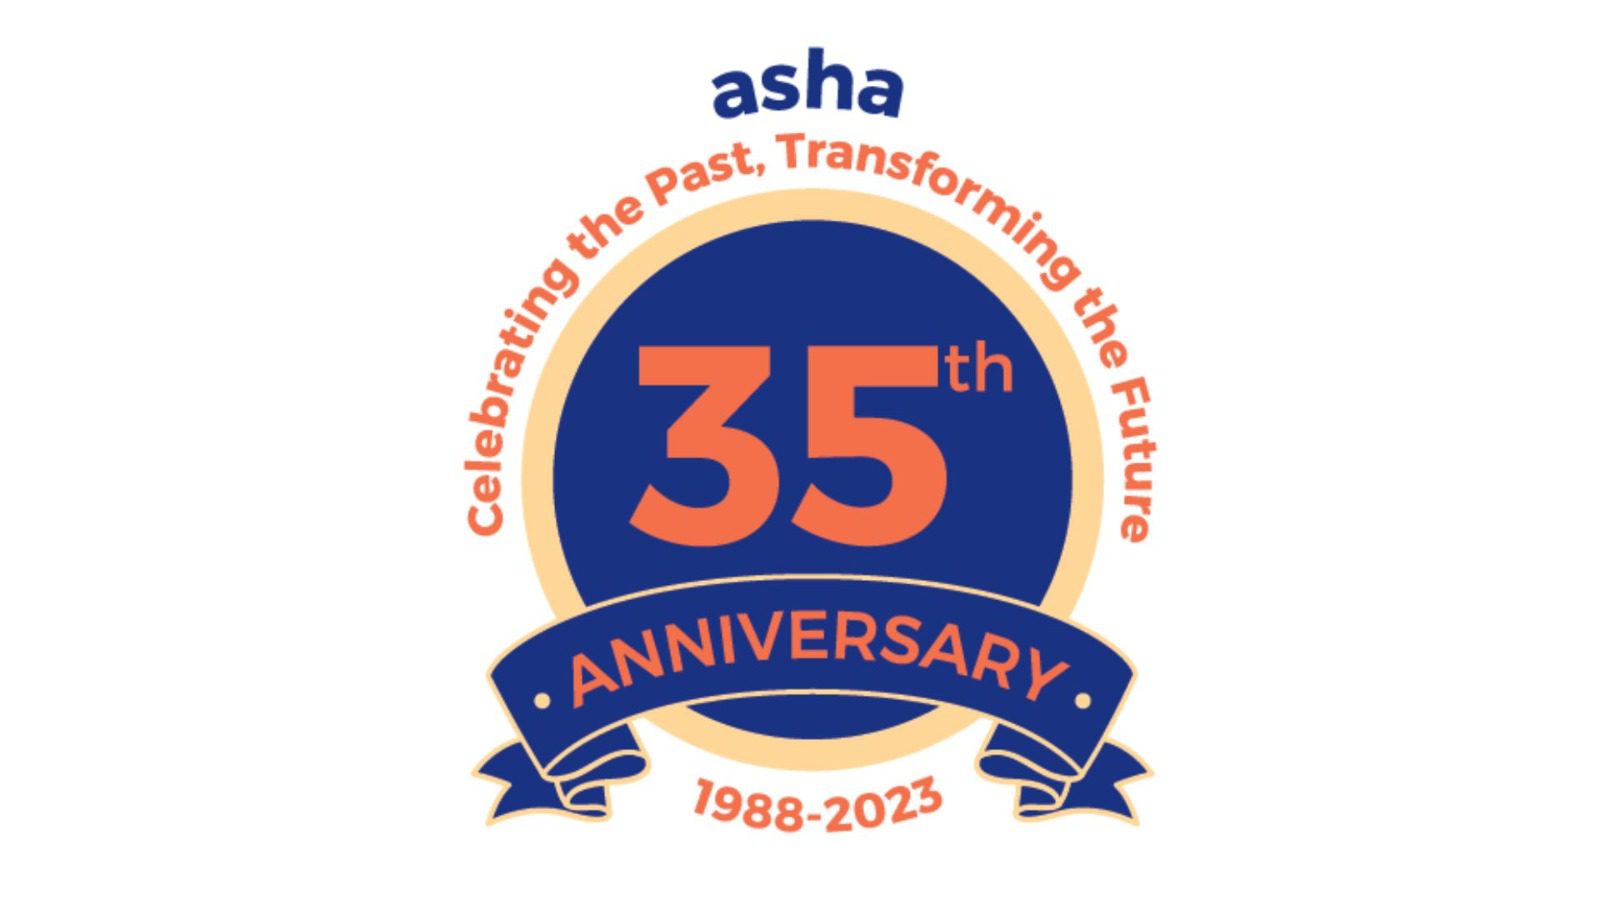 Celebrating Asha’s Ambassadors Dedication and Success